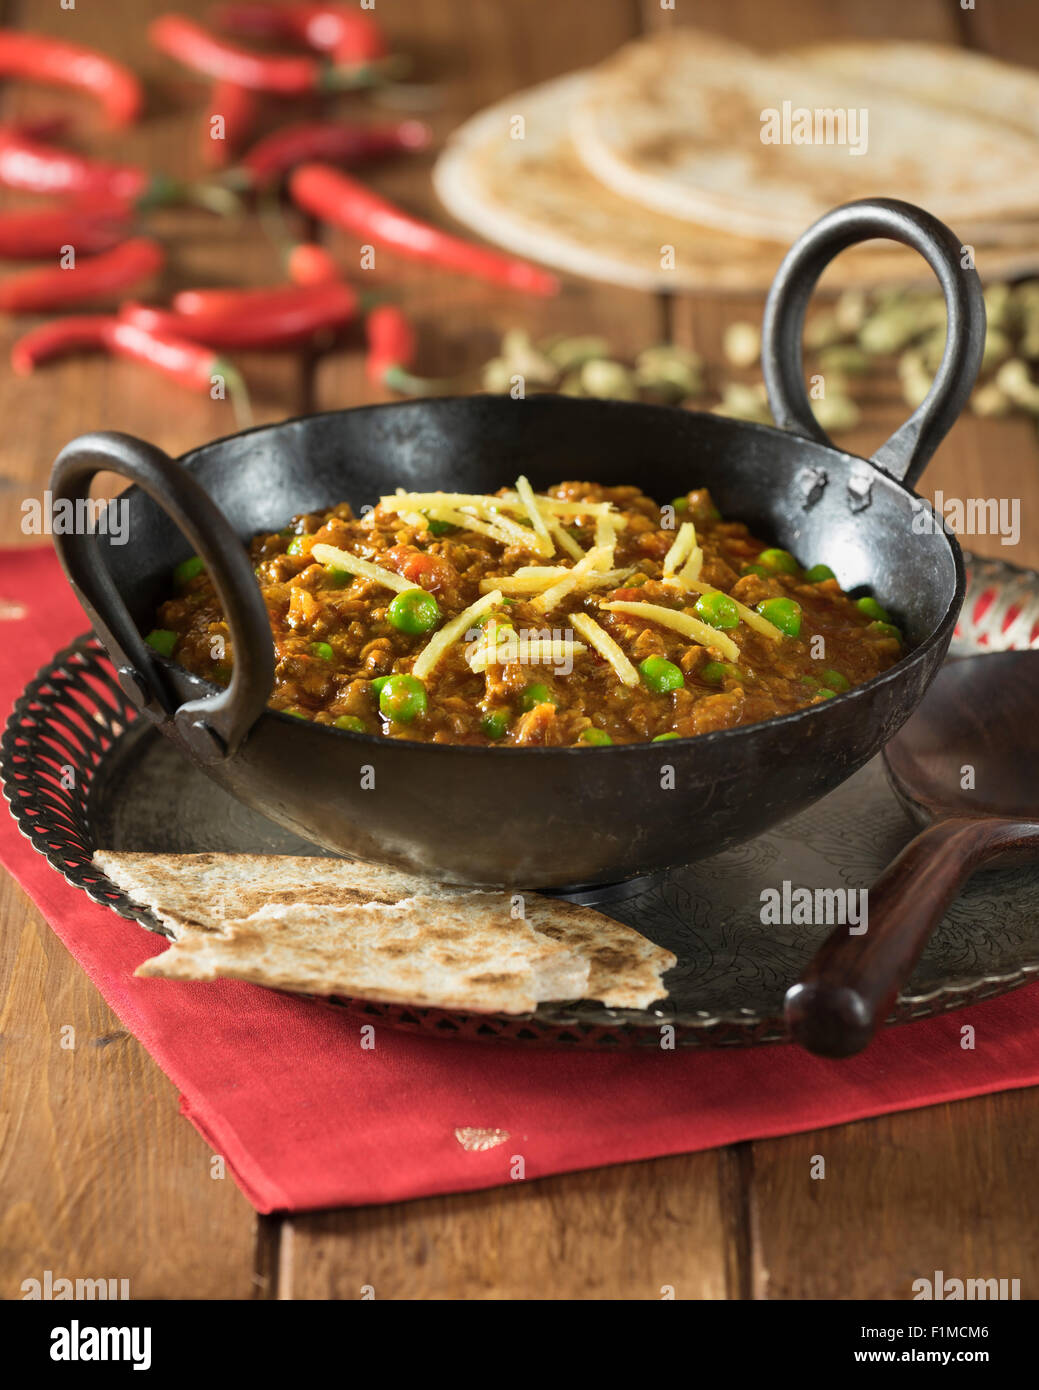 https://c8.alamy.com/comp/F1MCM6/keema-curry-spicy-minced-lamb-in-karahi-cooking-pot-india-food-F1MCM6.jpg